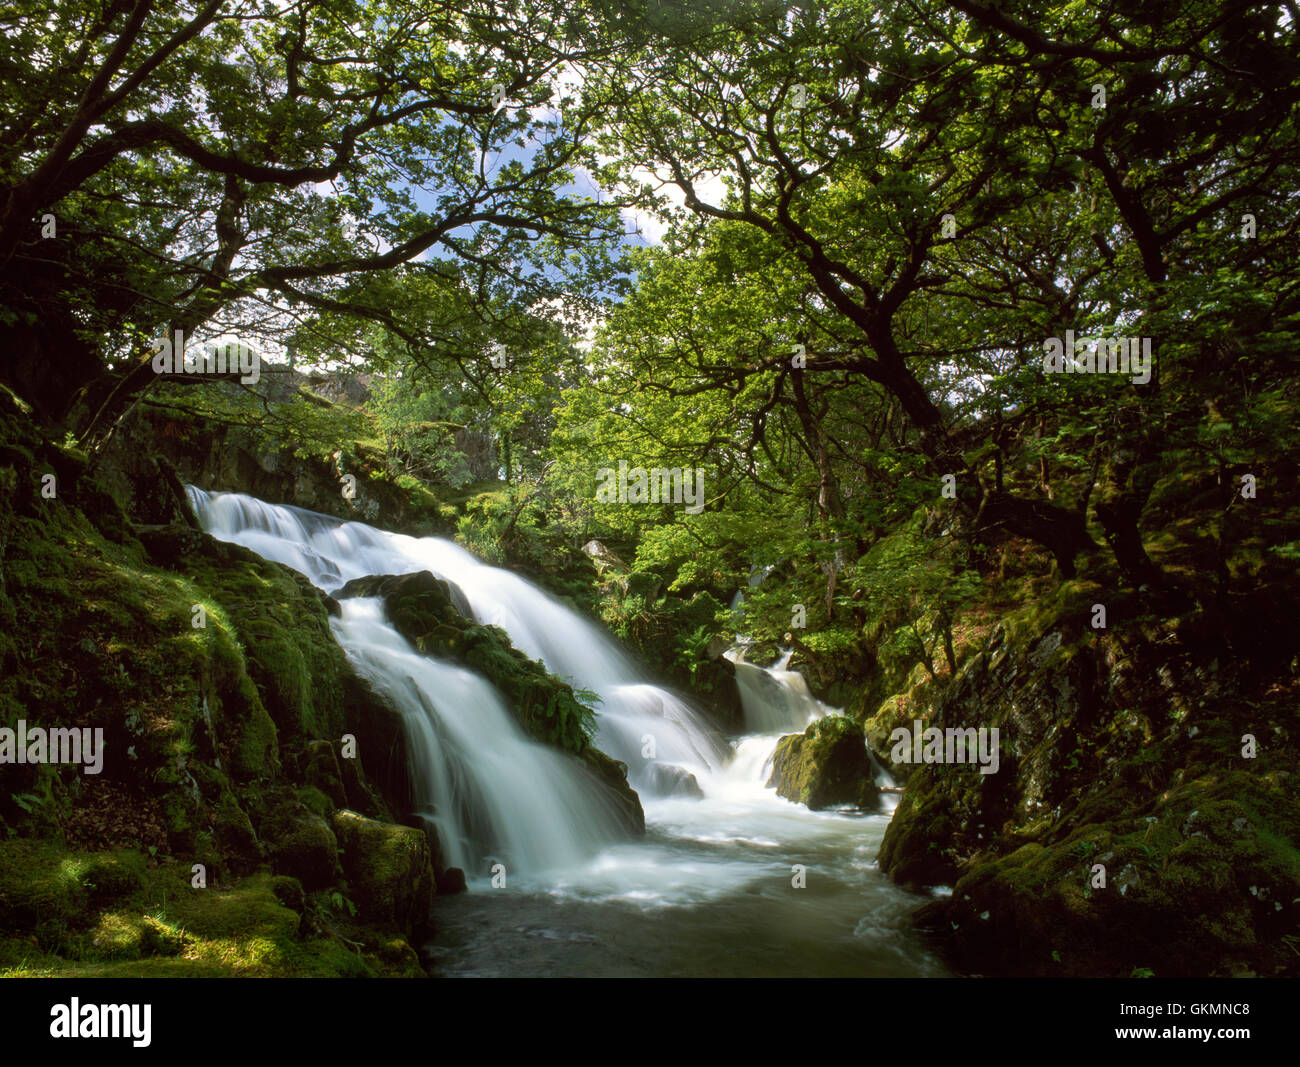 Ceunant Bach Wasserfall am Fluss Afon Arddu. Ein kleiner Bergbach am Rande des Snowdonia, bei Flut nach Starkregen, Gwynedd, Wales, UK Stockfoto